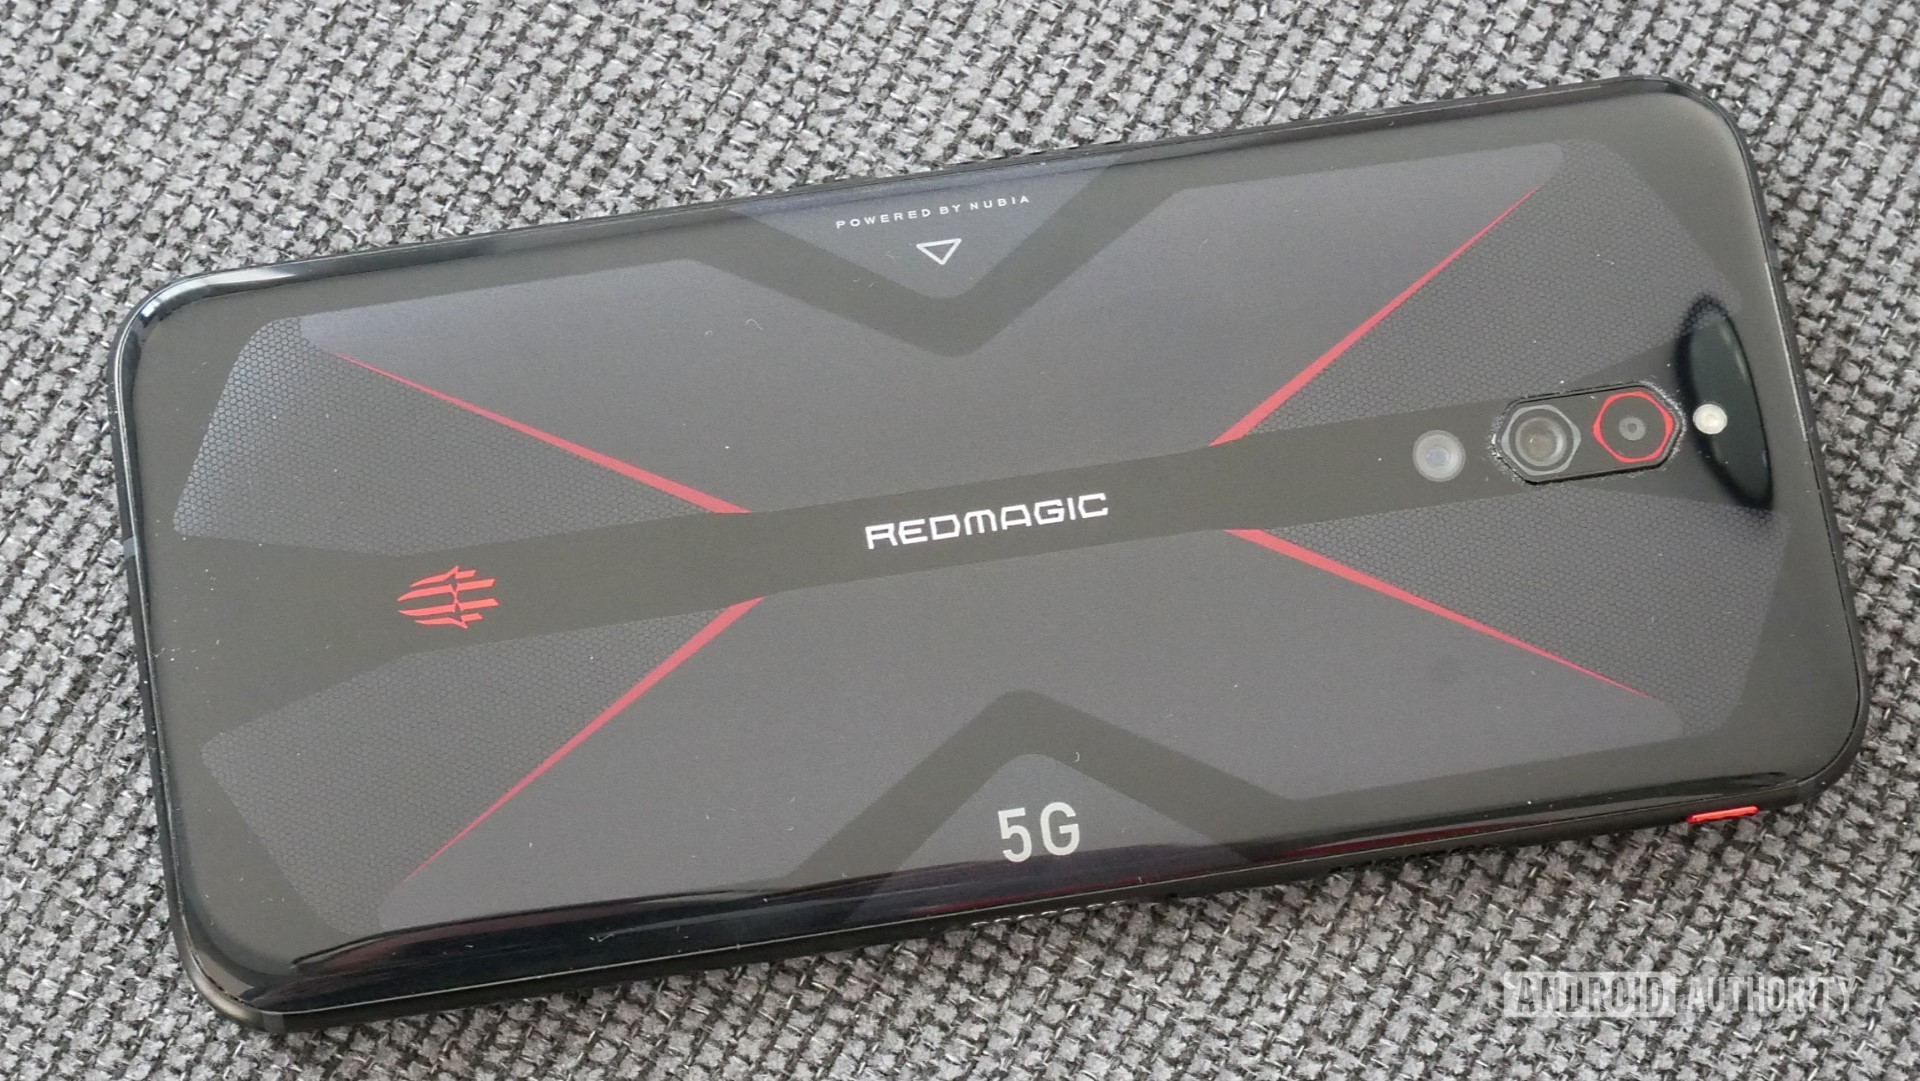 RedMagic 5G 24 back of phone grey background - The best Snapdragon 865 phones